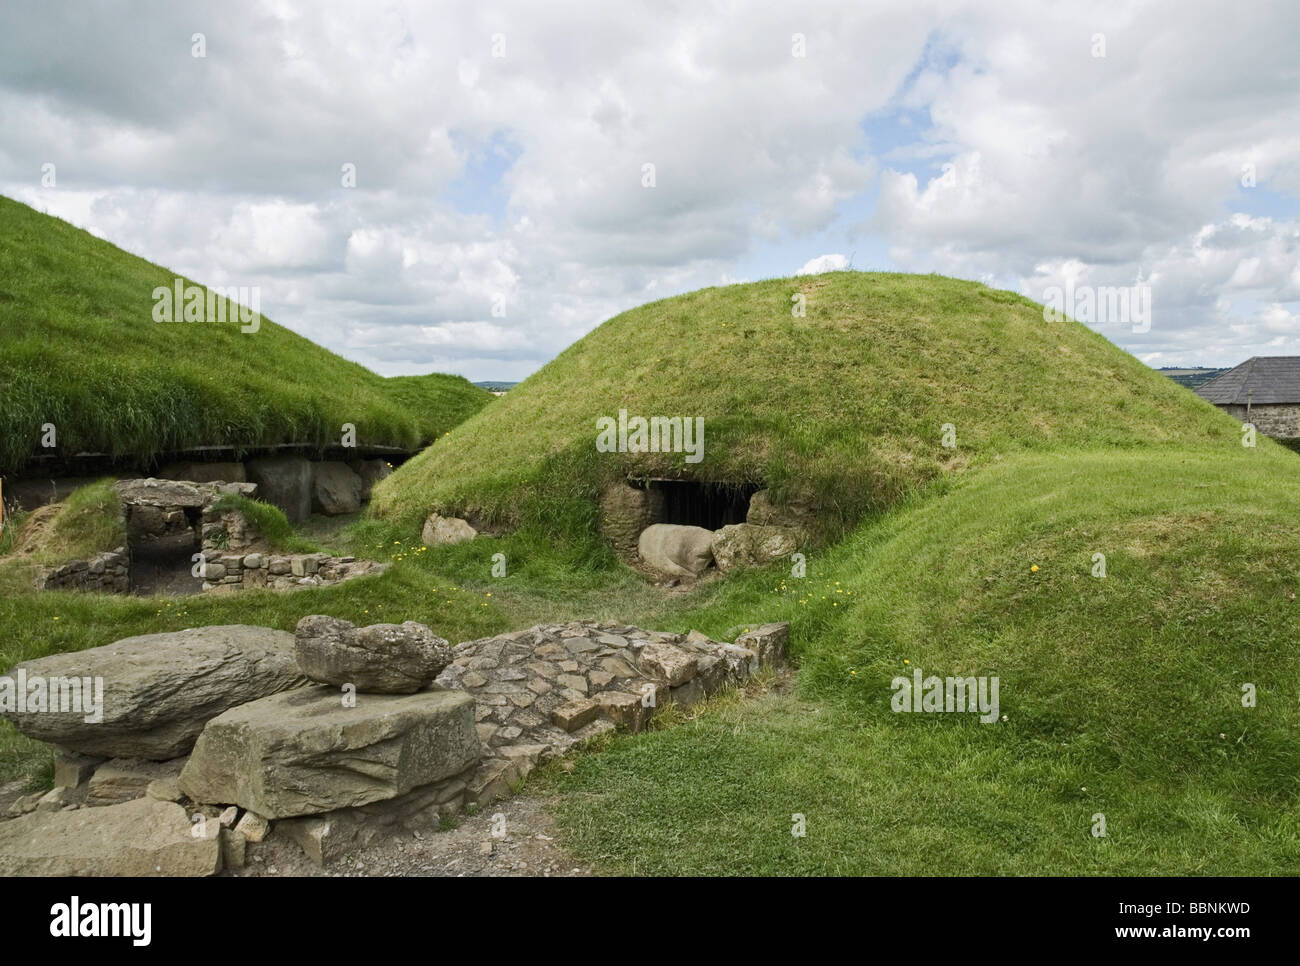 Géographie / voyage, Irlande, Newgrange, mégalithe, complexe de la colline tombe, vers 5000 ans, Additional-Rights Clearance-Info-Not-Available- Banque D'Images